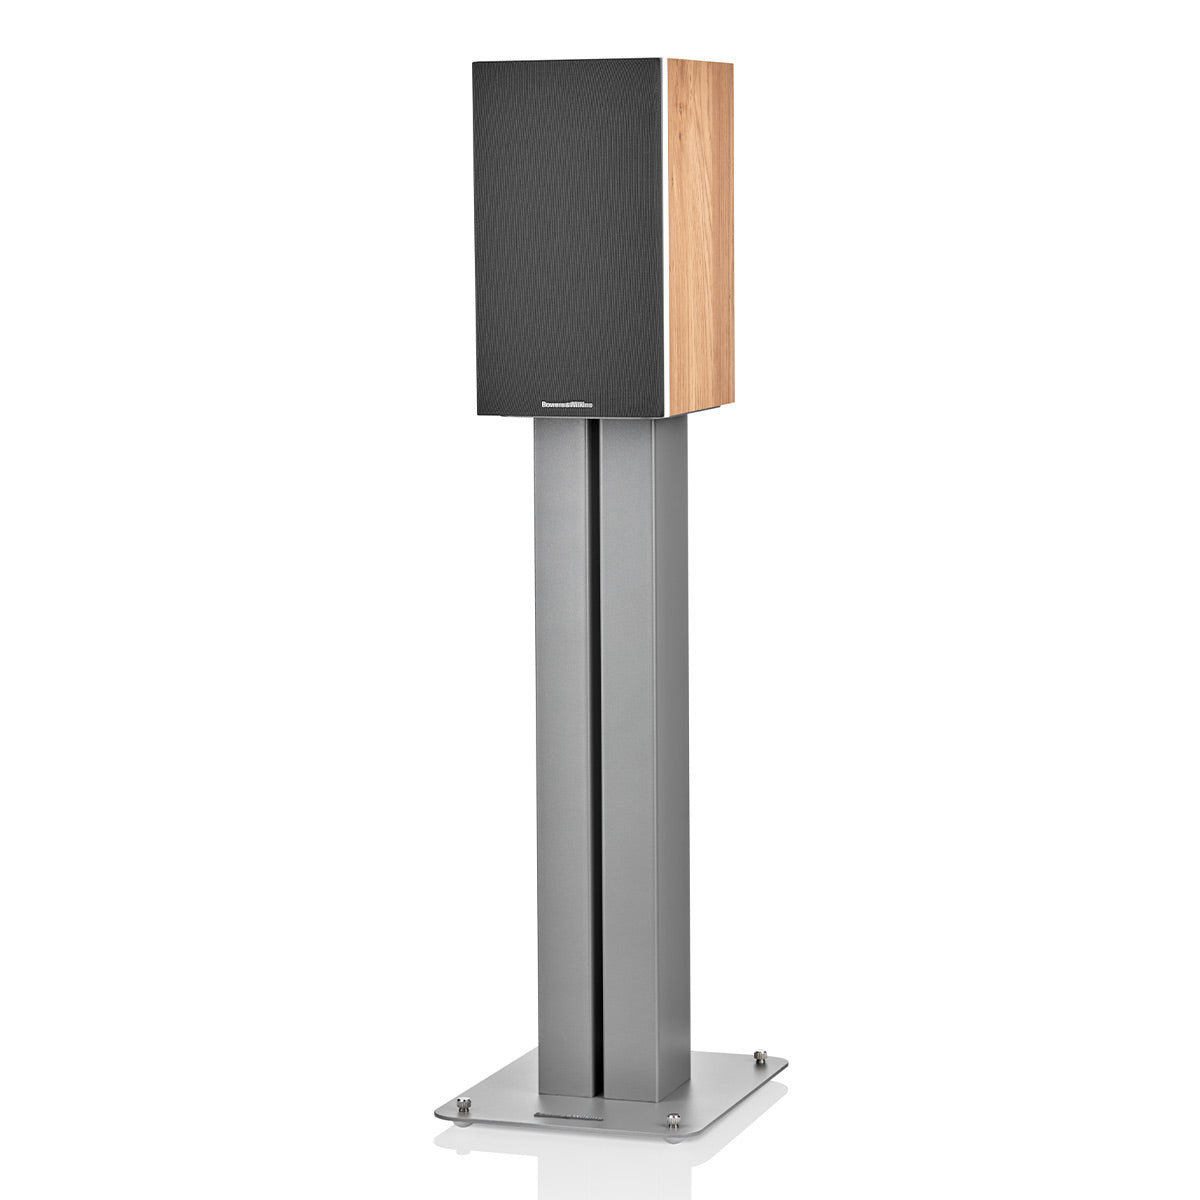 Bowers & Wilkins FS-600 Floor Stands for S3 600 Series Bookshelf Speakers - Pair (Silver)